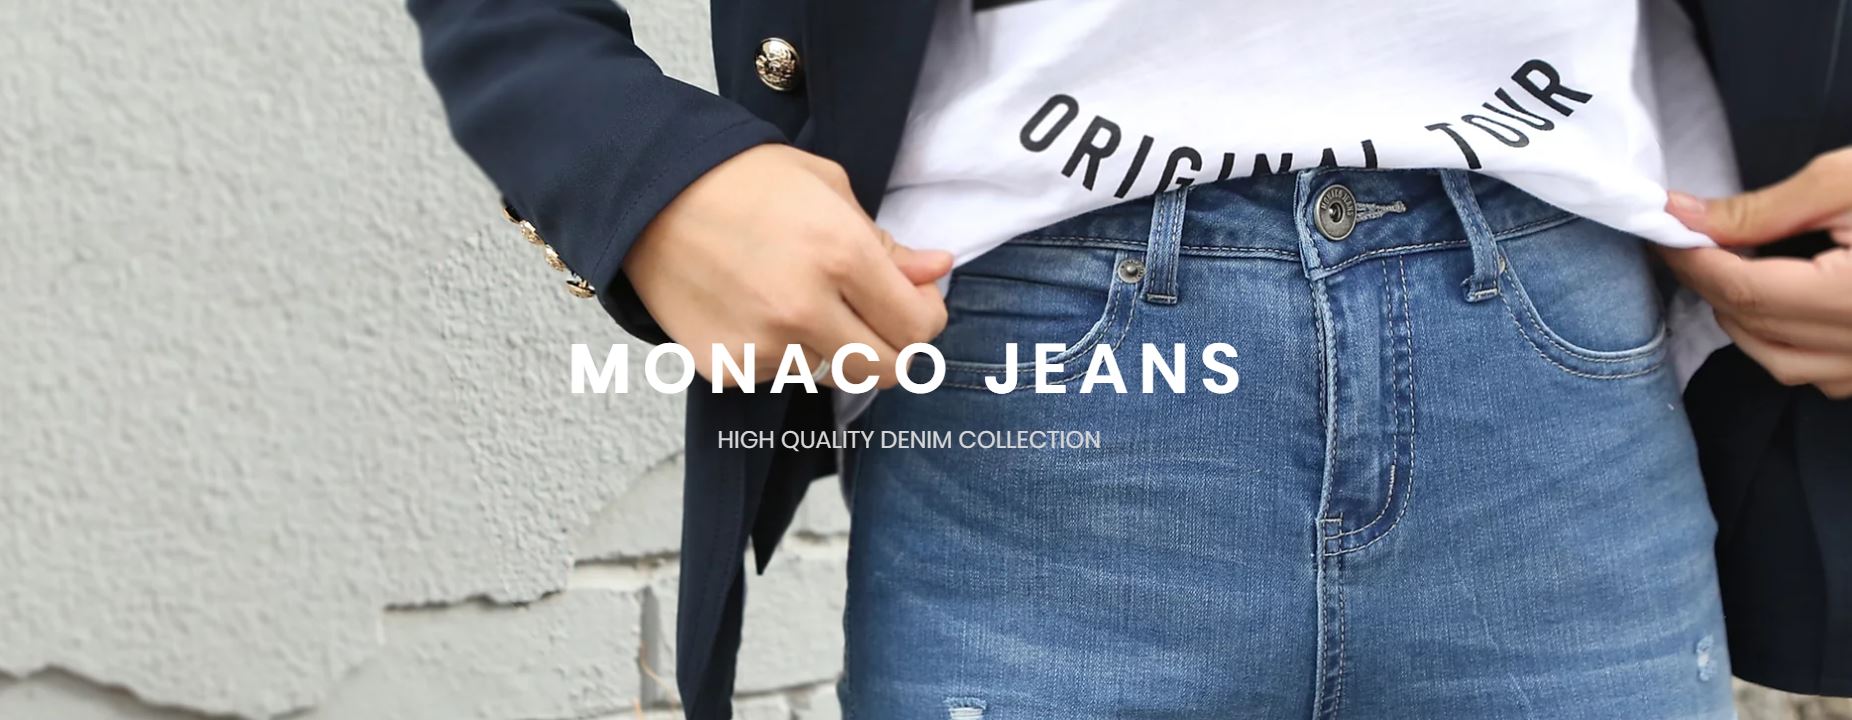 Monaco Jeans – www.monacojeans.com